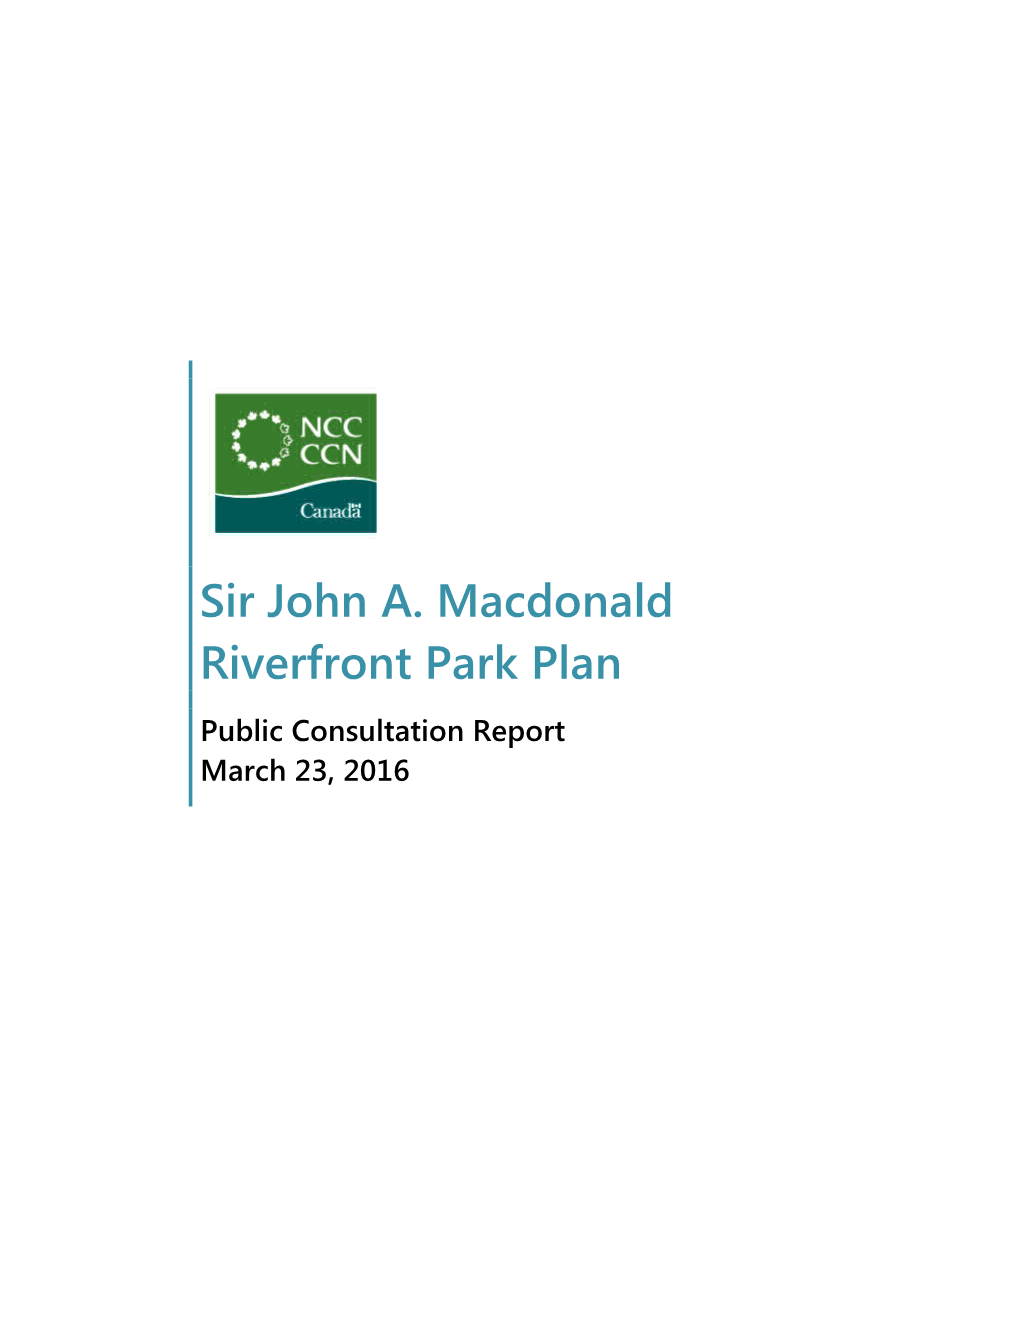 Sir John A. Macdonald Riverfront Park Plan Public Consultation Report March 23, 2016